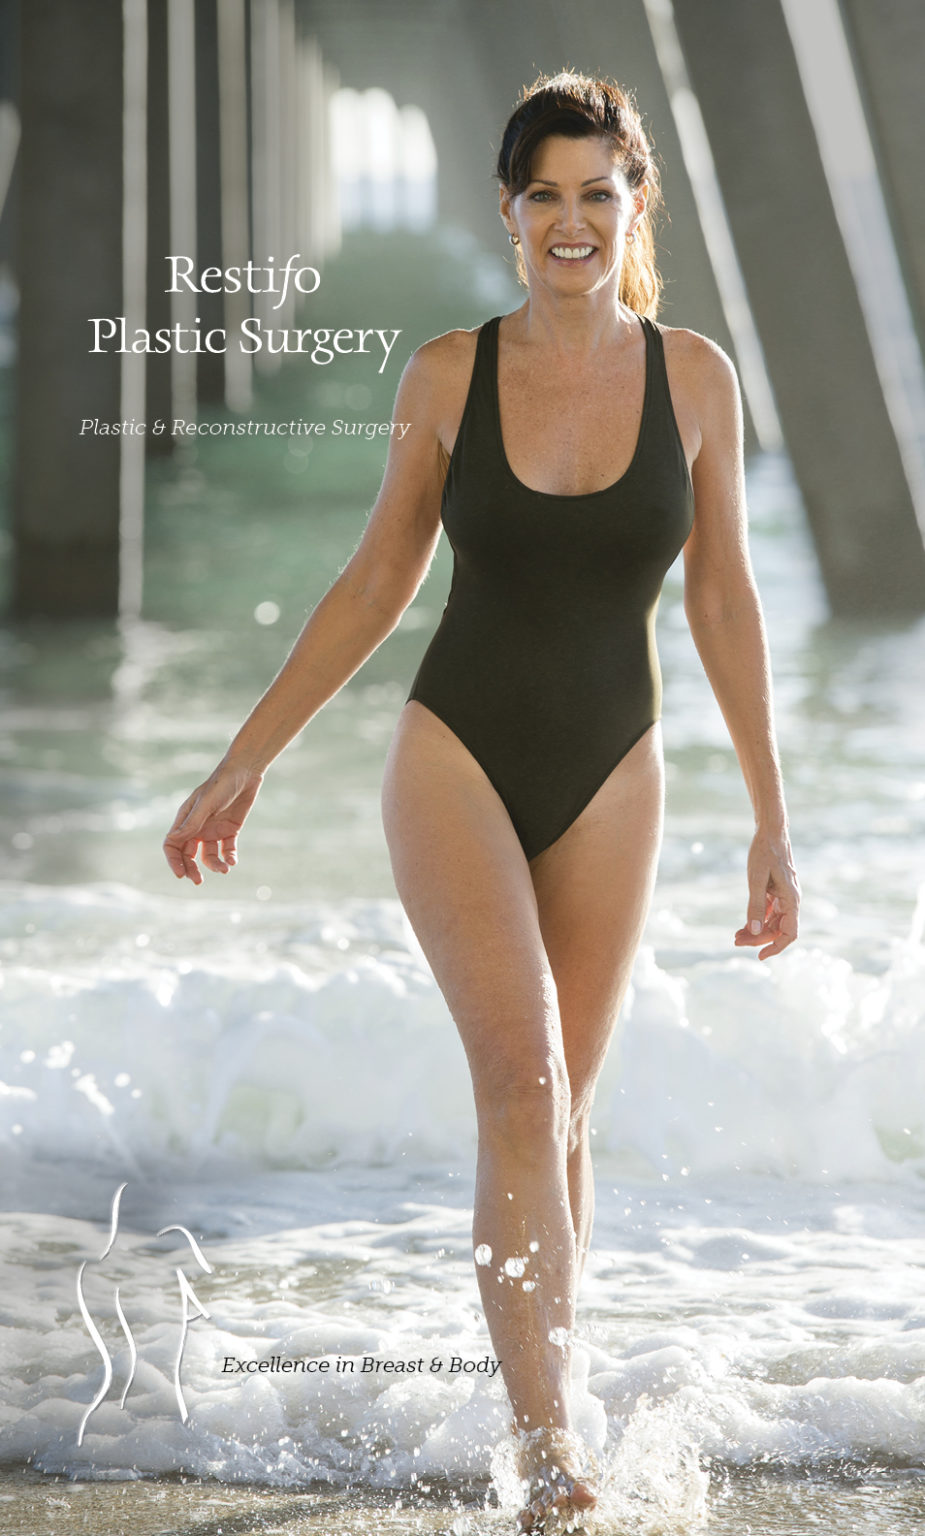 Restifo Plastic Surgery Brochure Graphic Design 04